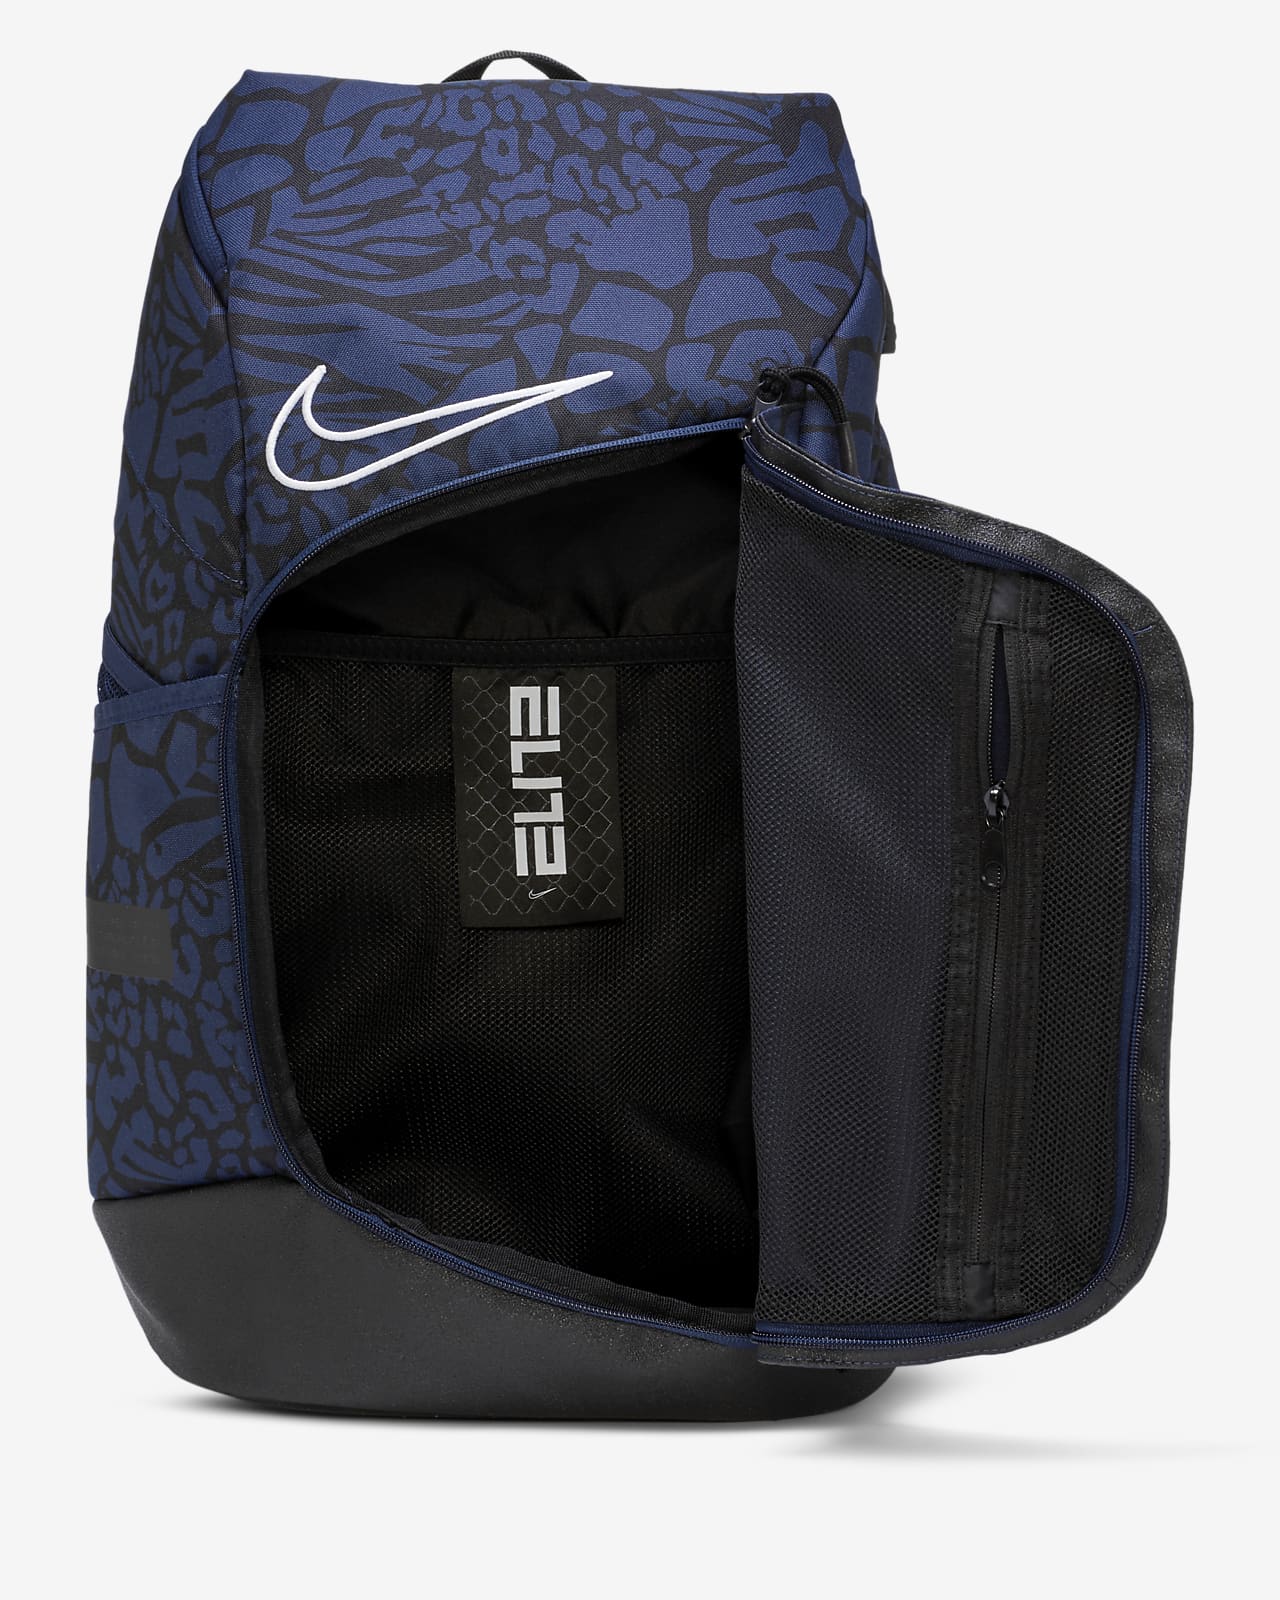 nike elite backpack size